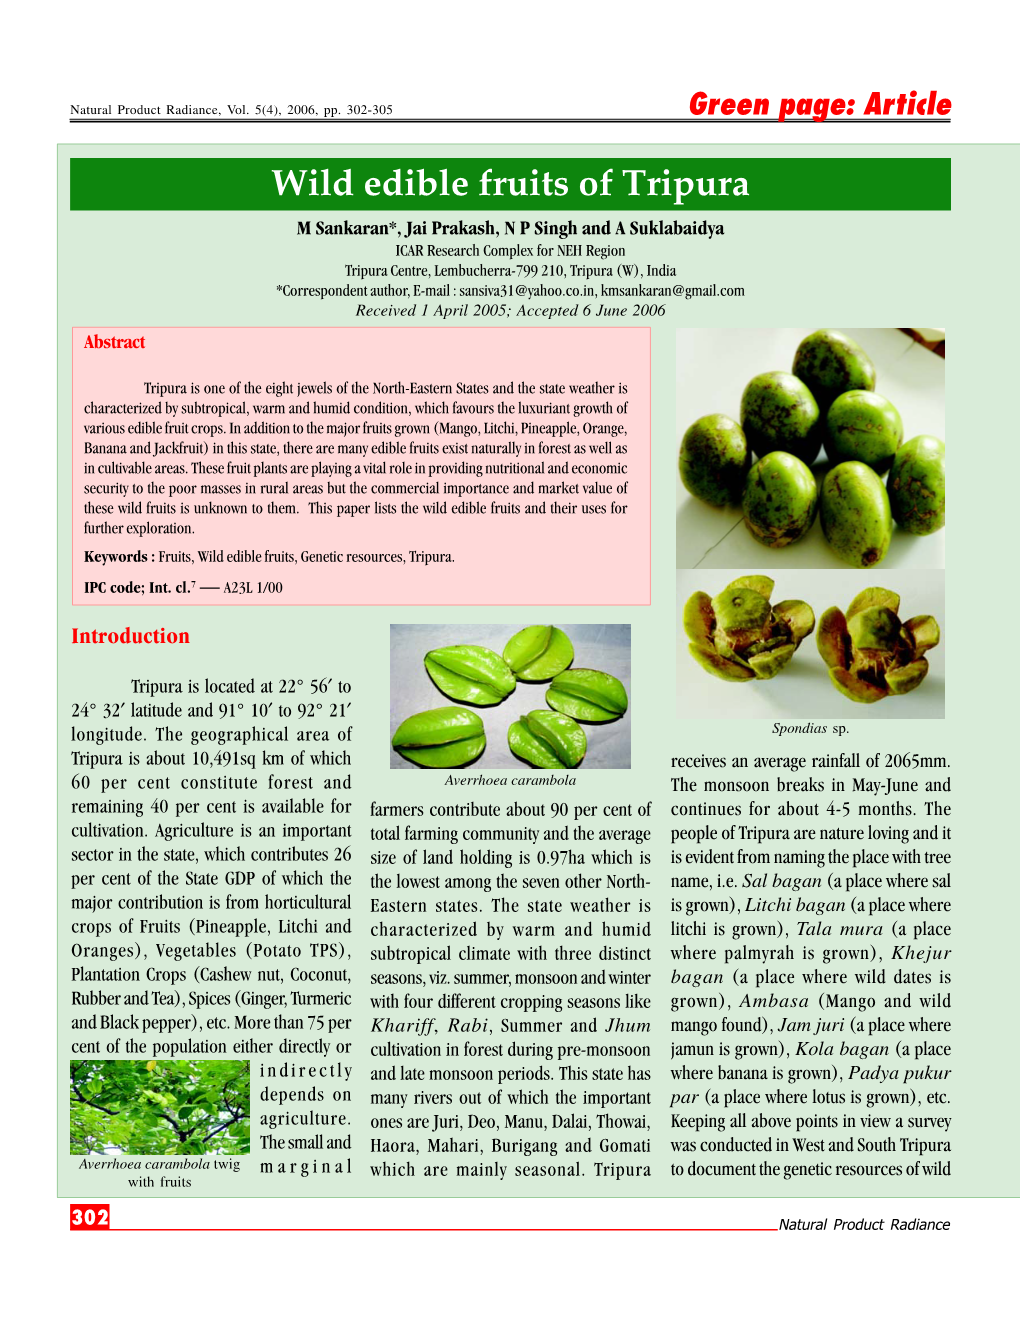 Wild Edible Fruits of Tripura